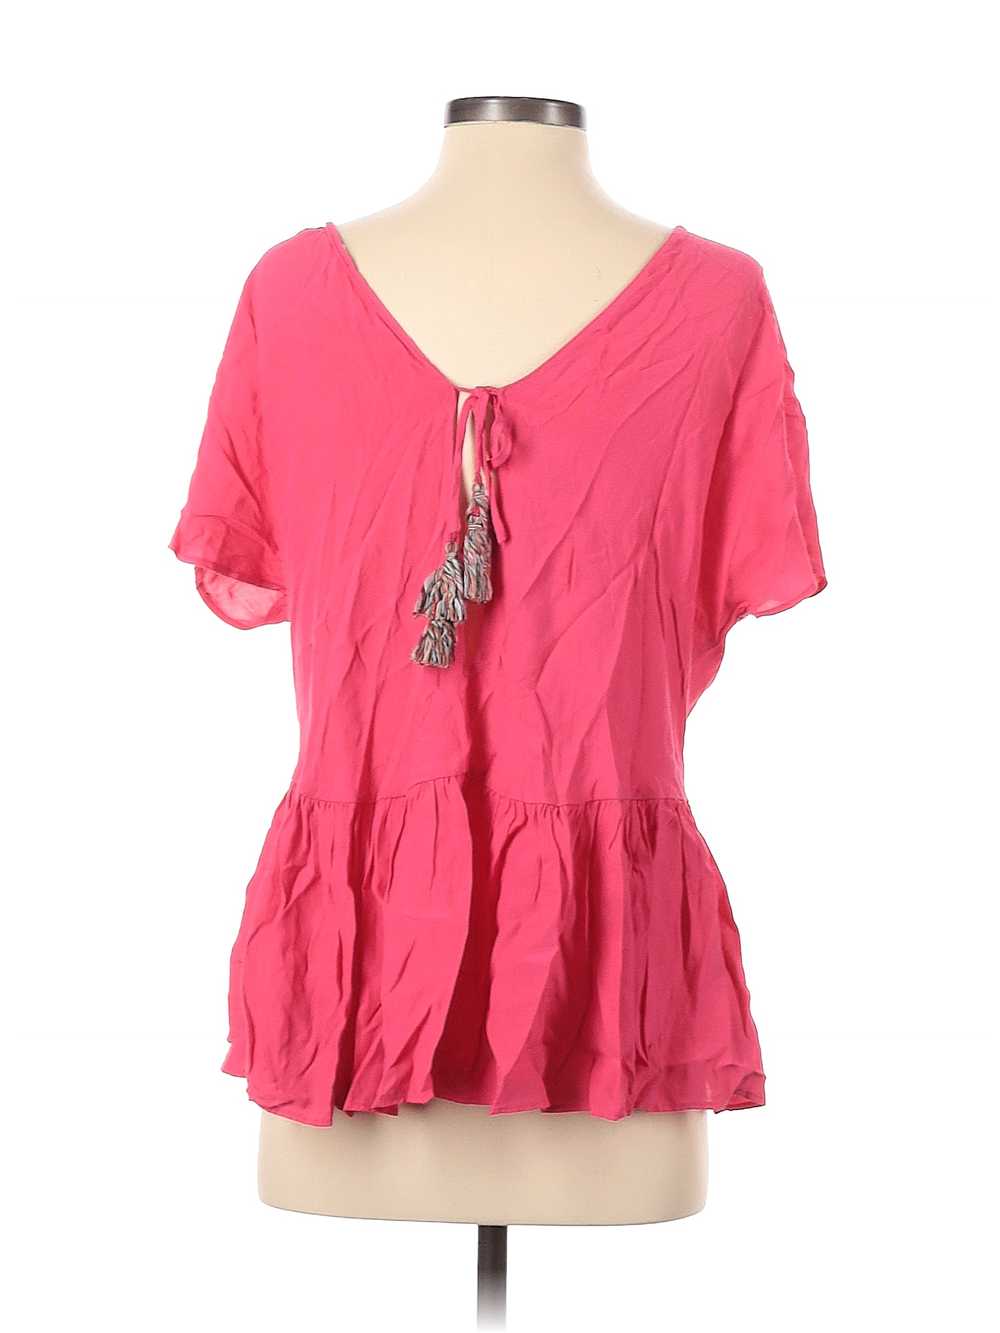 Trafaluc by Zara Women Pink Short Sleeve Blouse XS - image 2